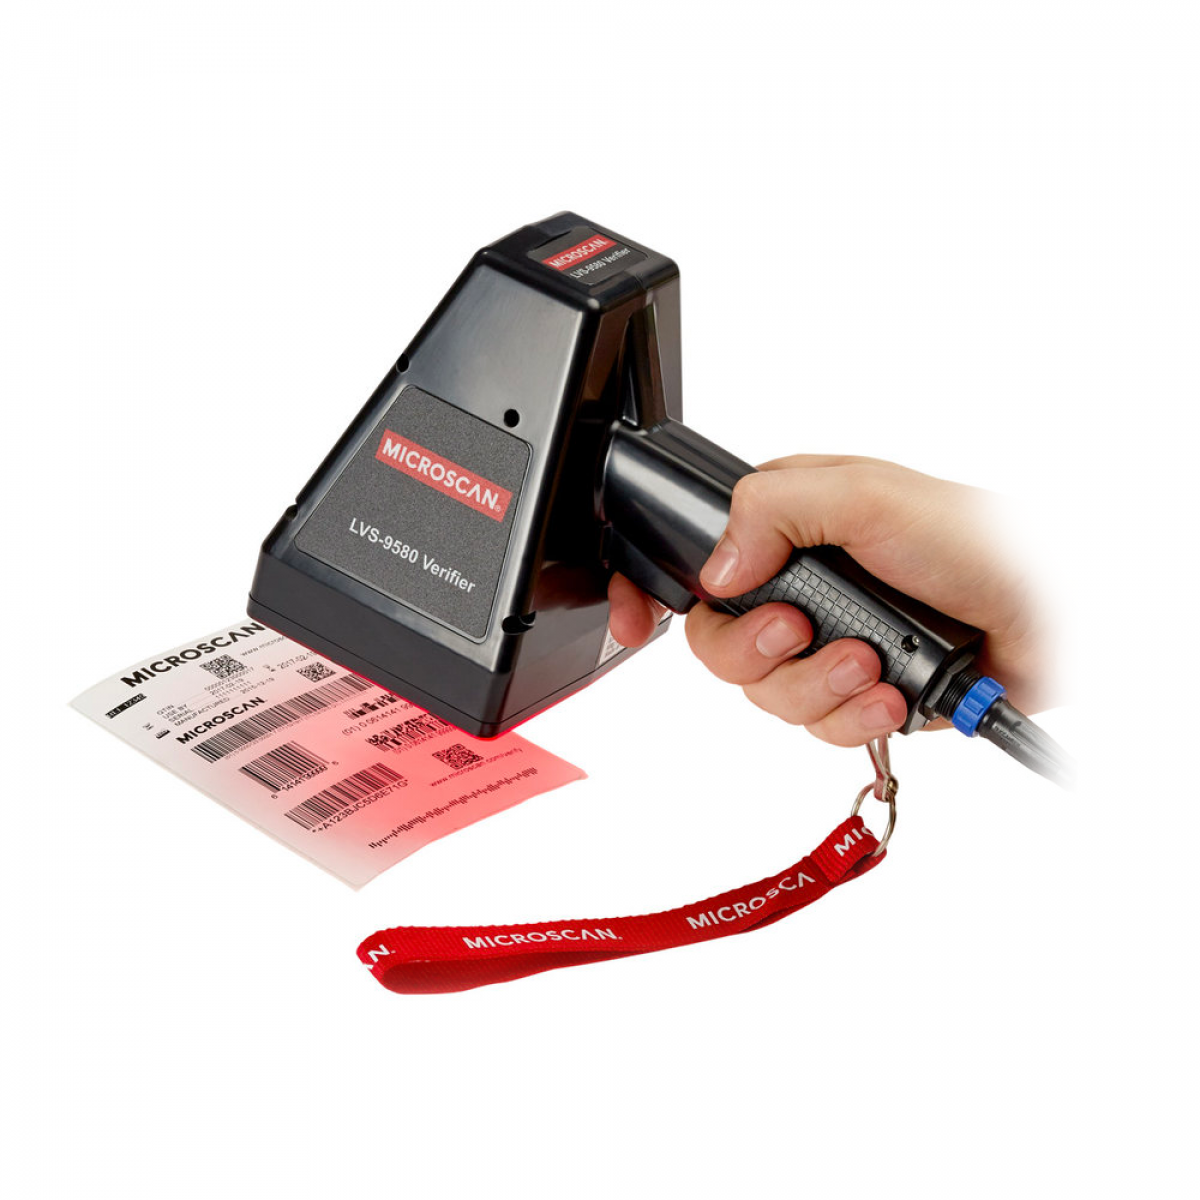 Microscan LVS-9850 portable barcode verification system